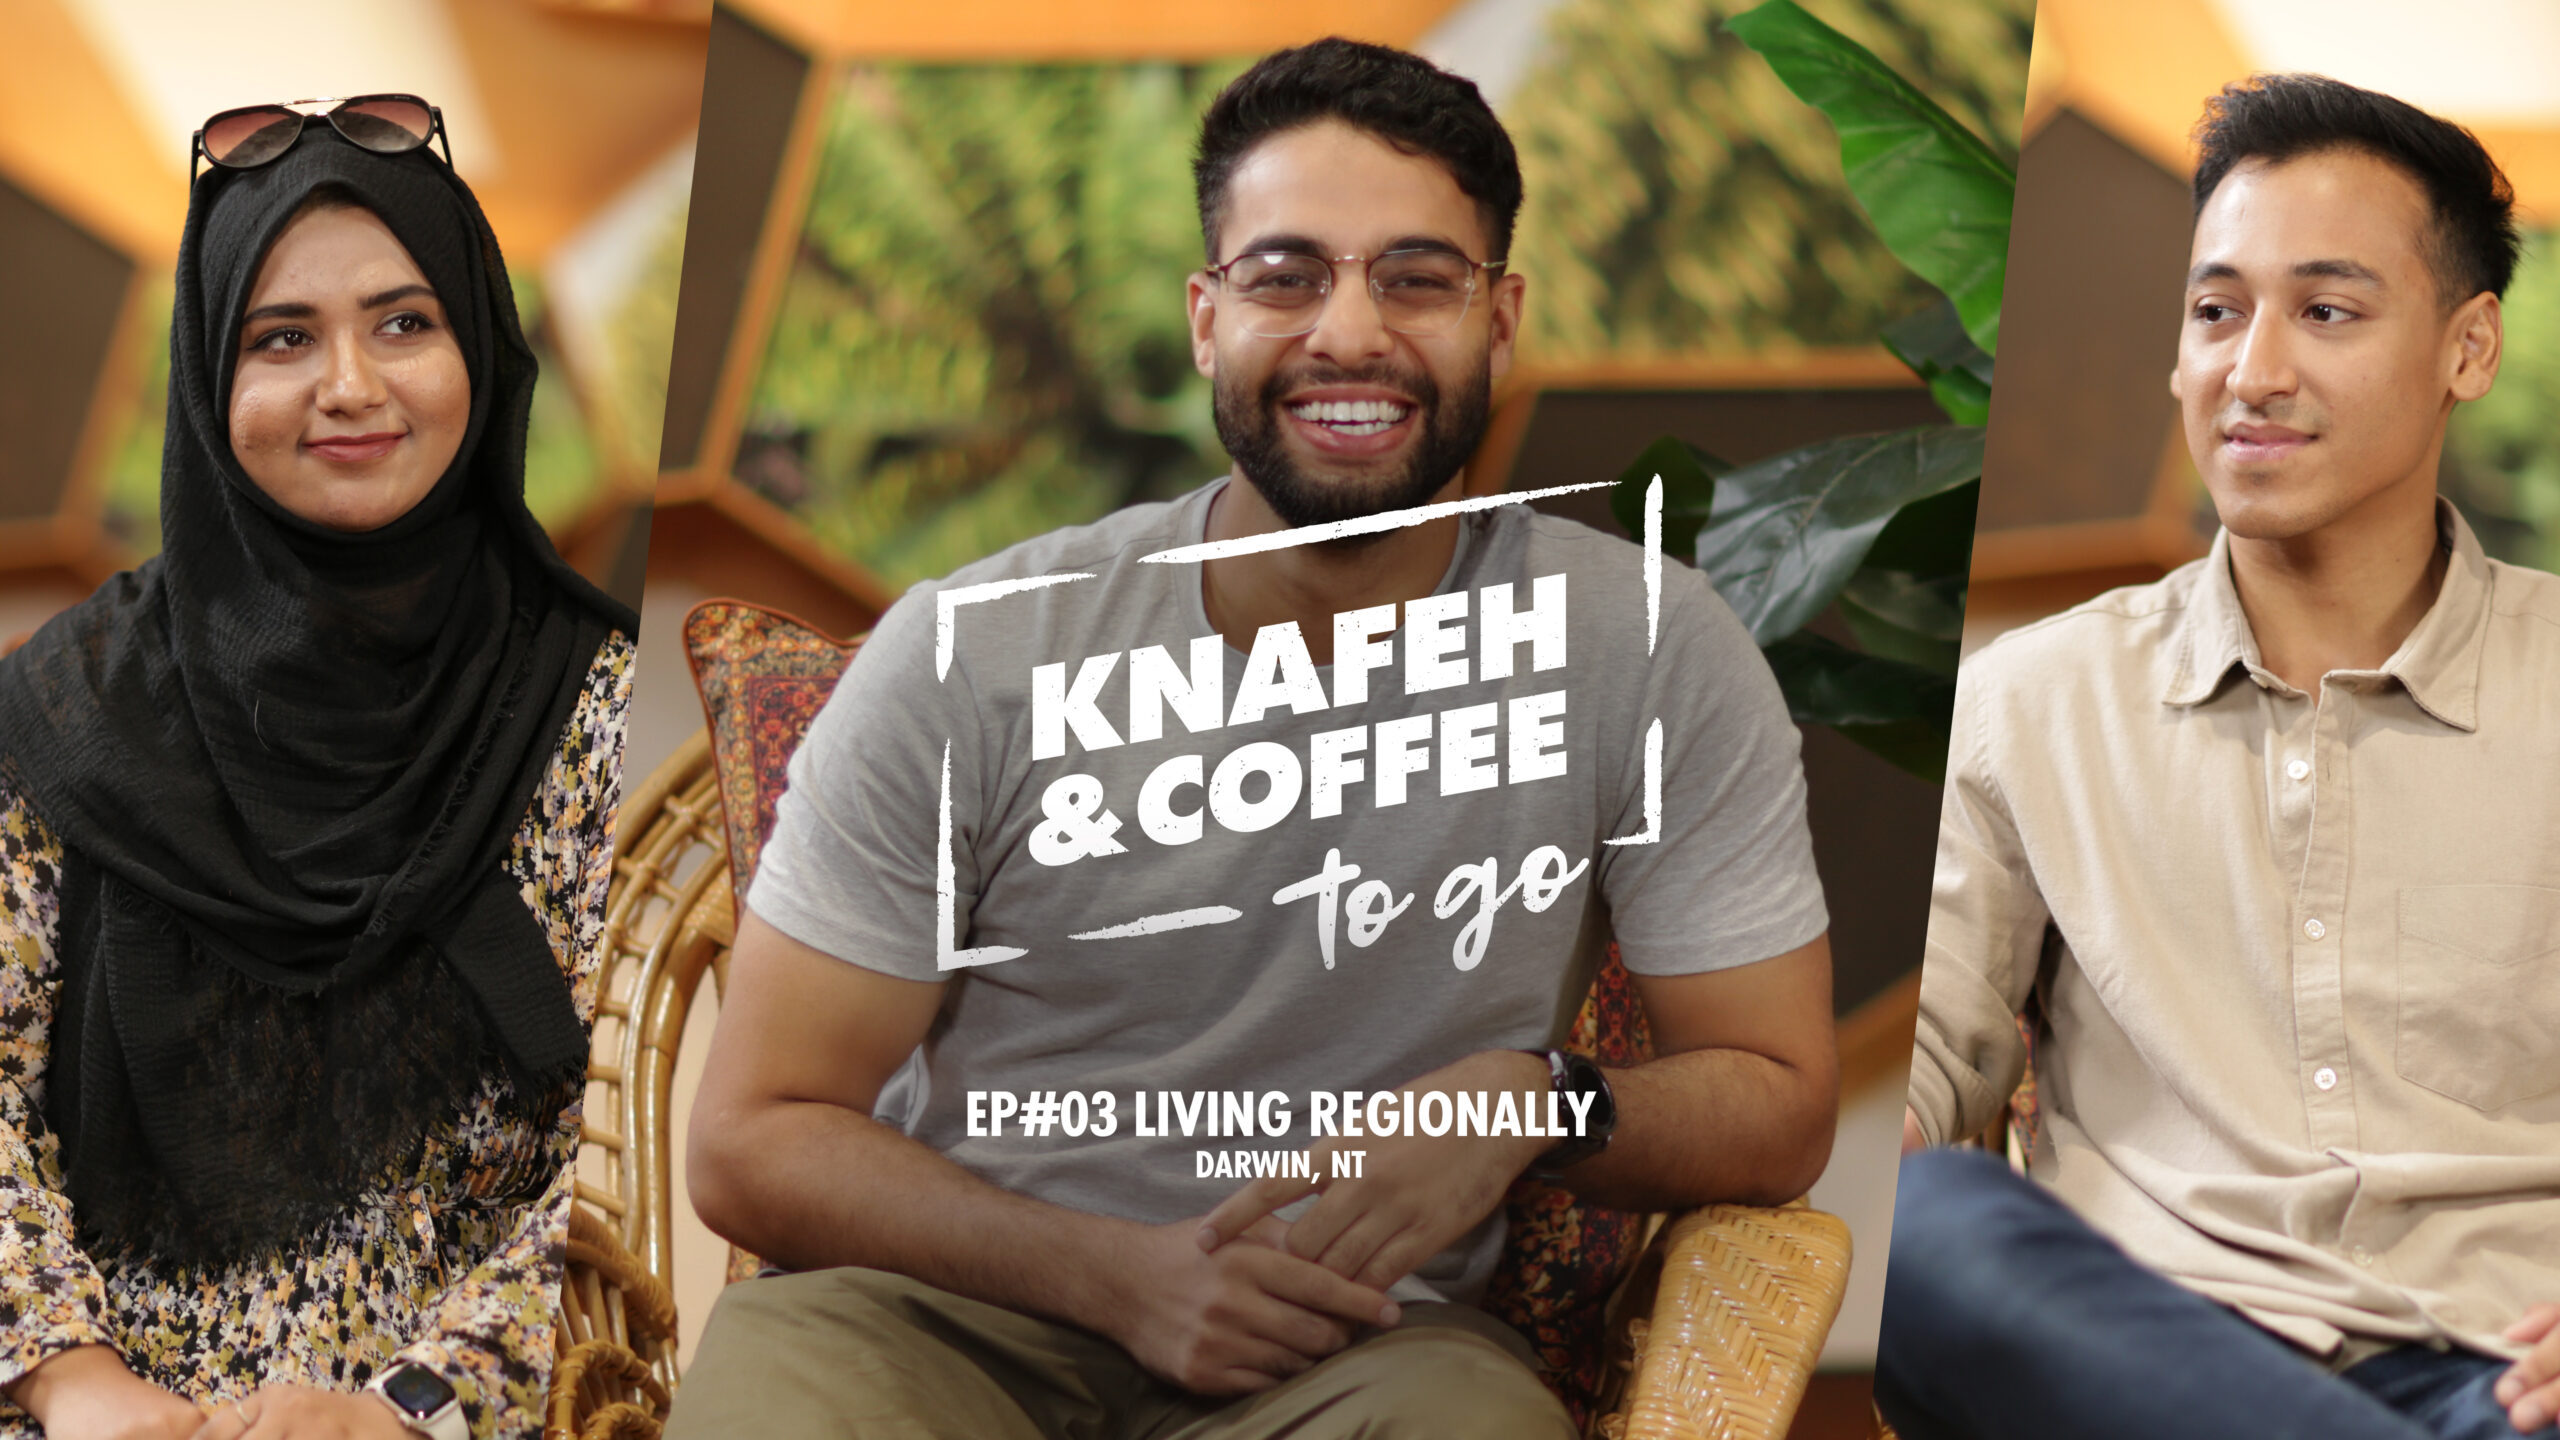 Knafeh & Coffee To Go in Darwin